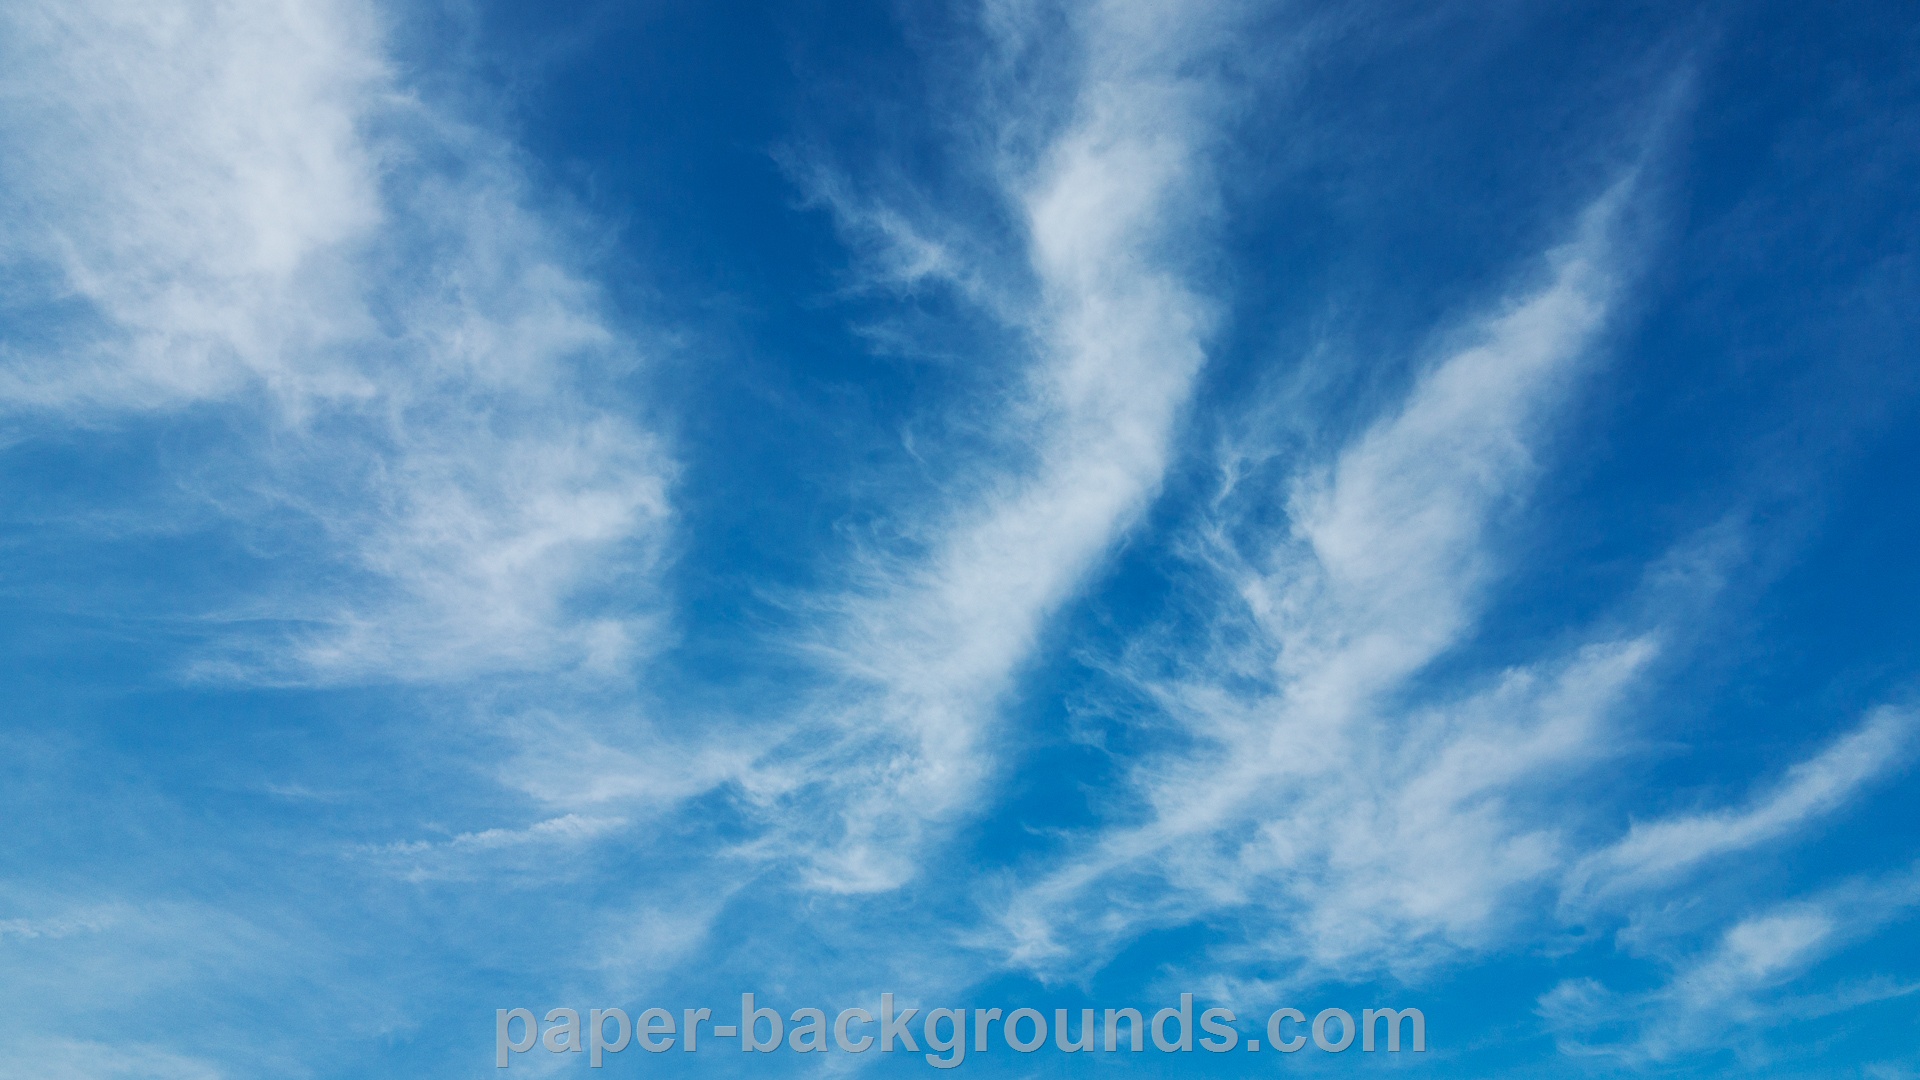 paper backgroundscomtextureimages201207blue sky clouds background